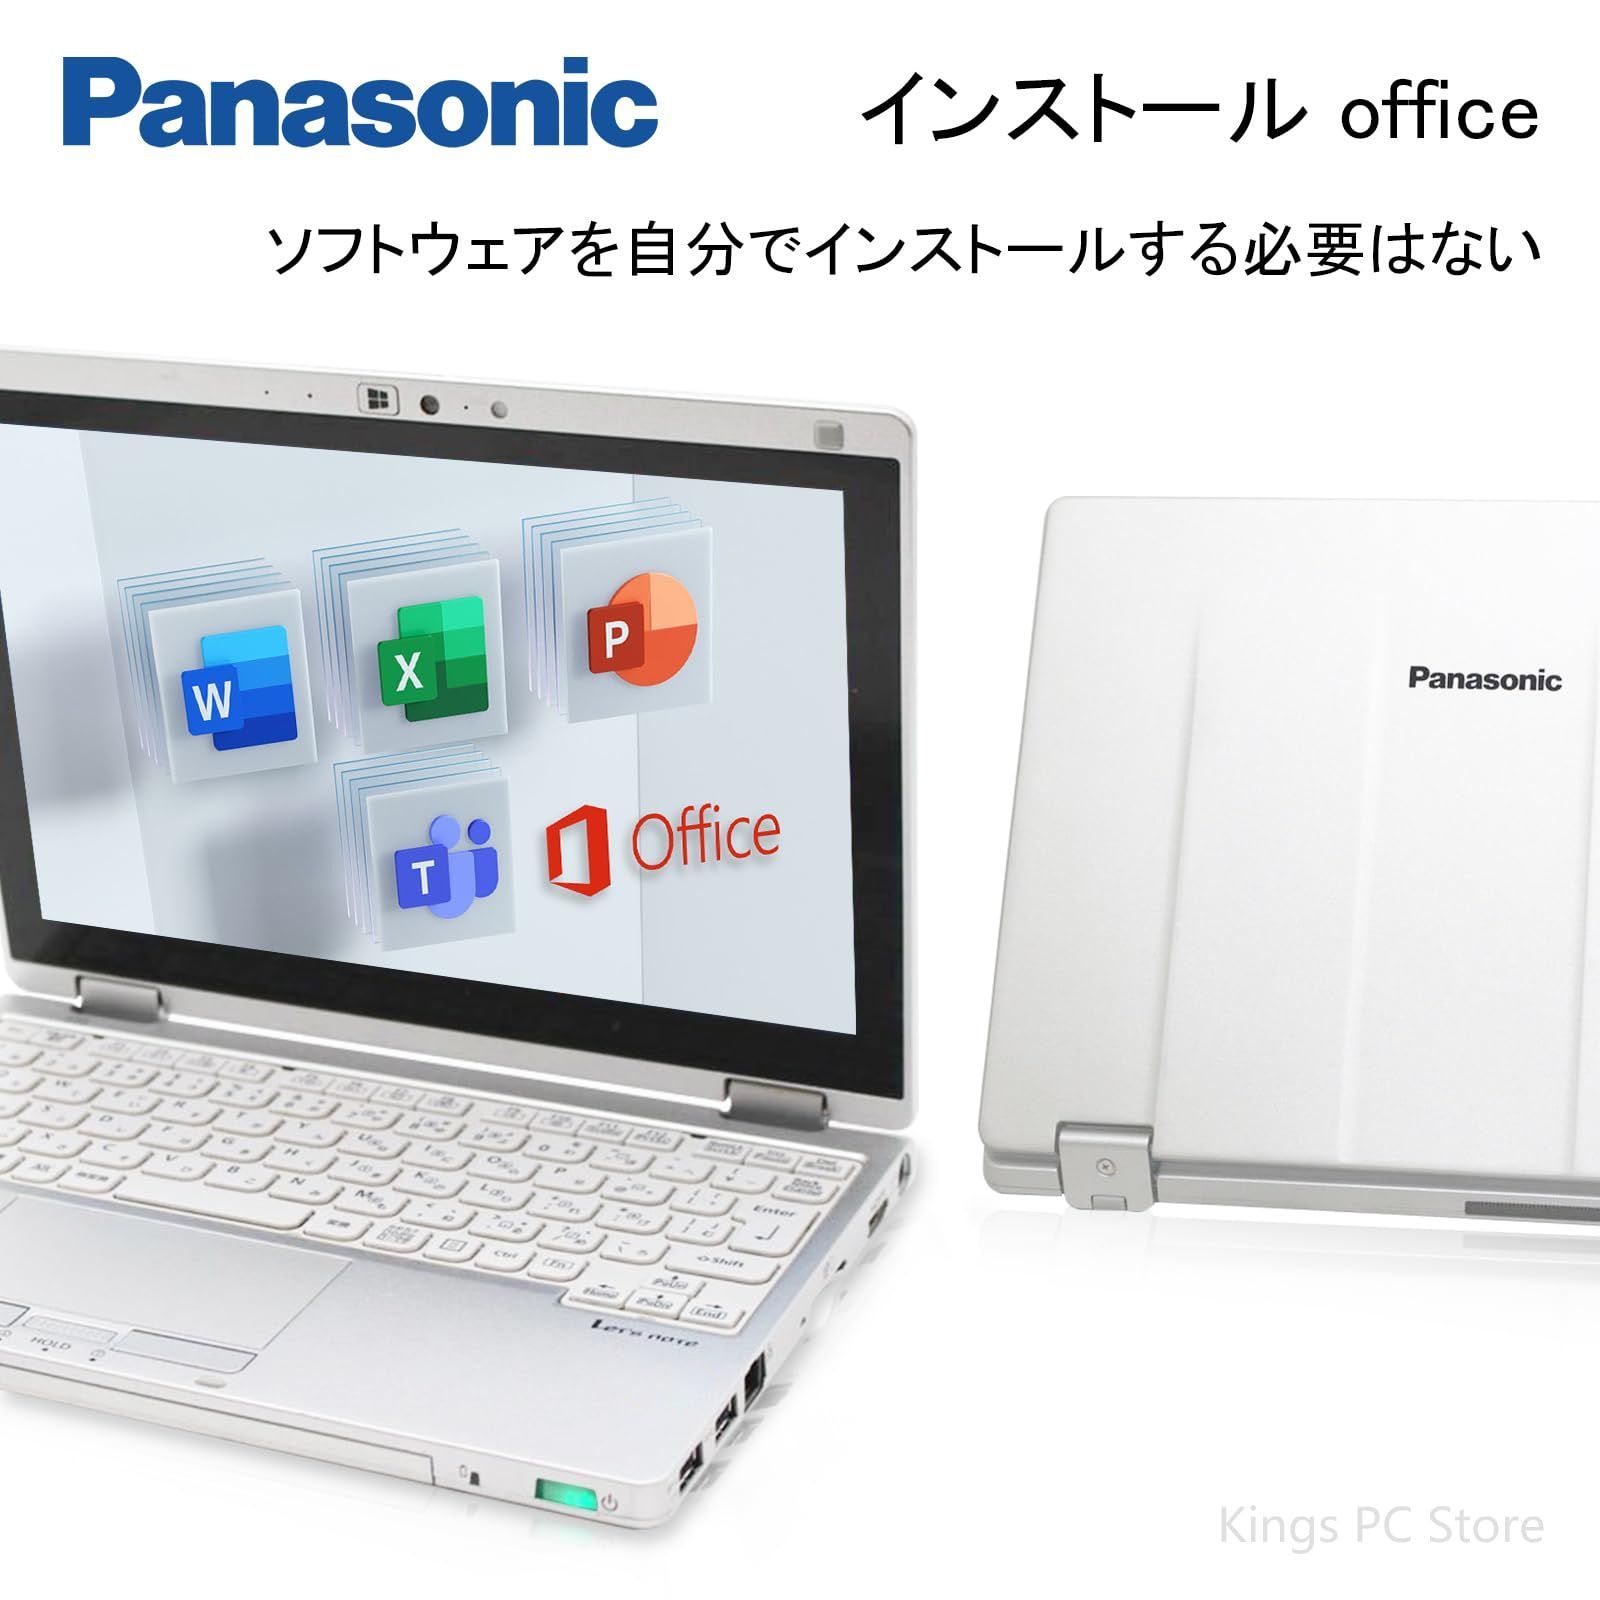 人気商品】Store)(整備済み品) PC (Kings (8G/SSD:128G) 2019搭載